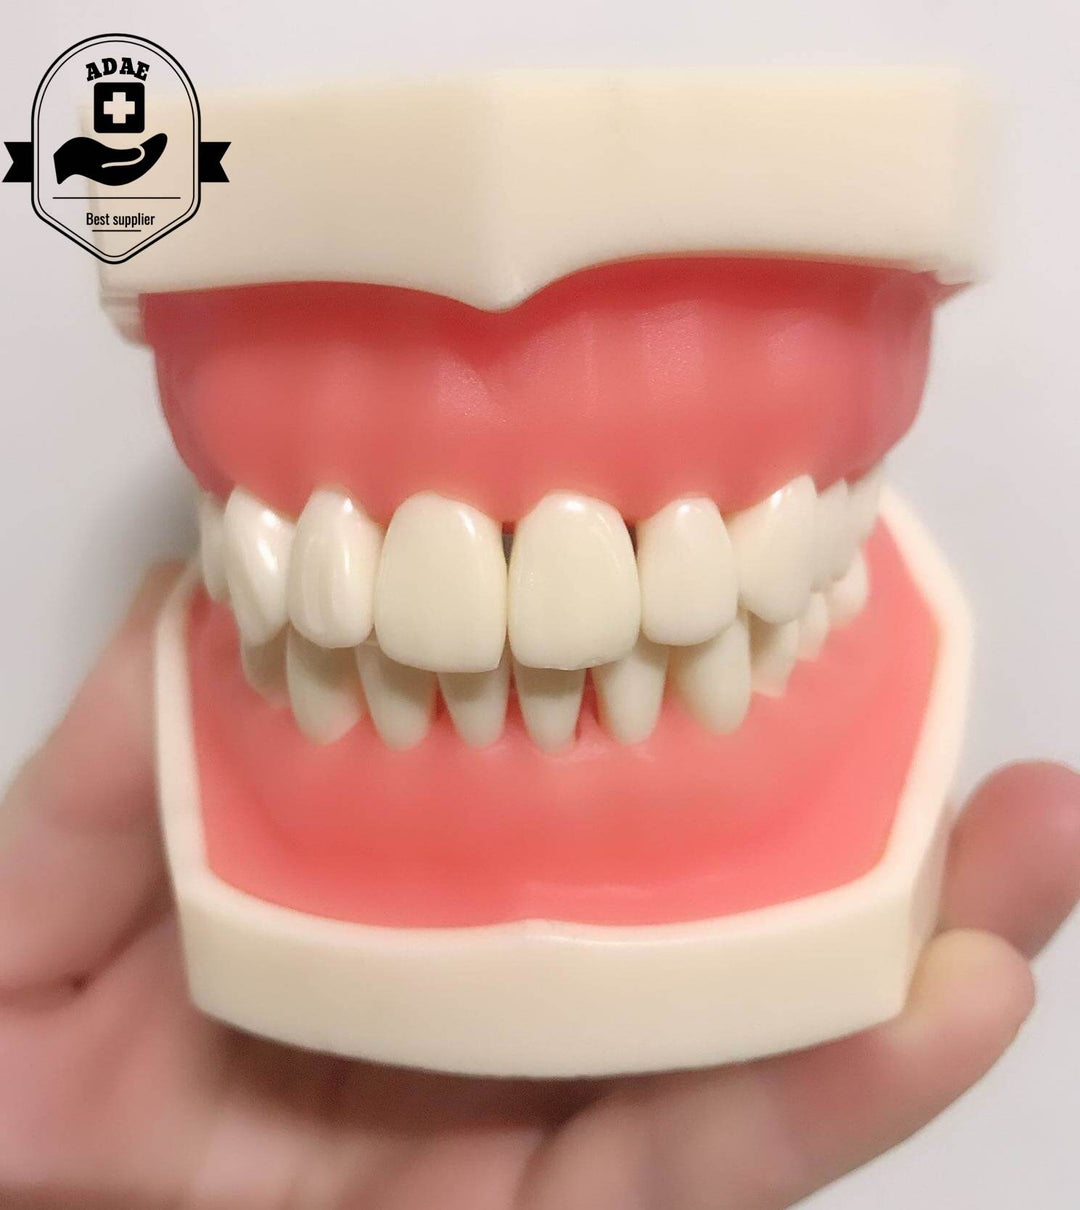 ADAE AD028 dental study model - ADAE Dental Online Store